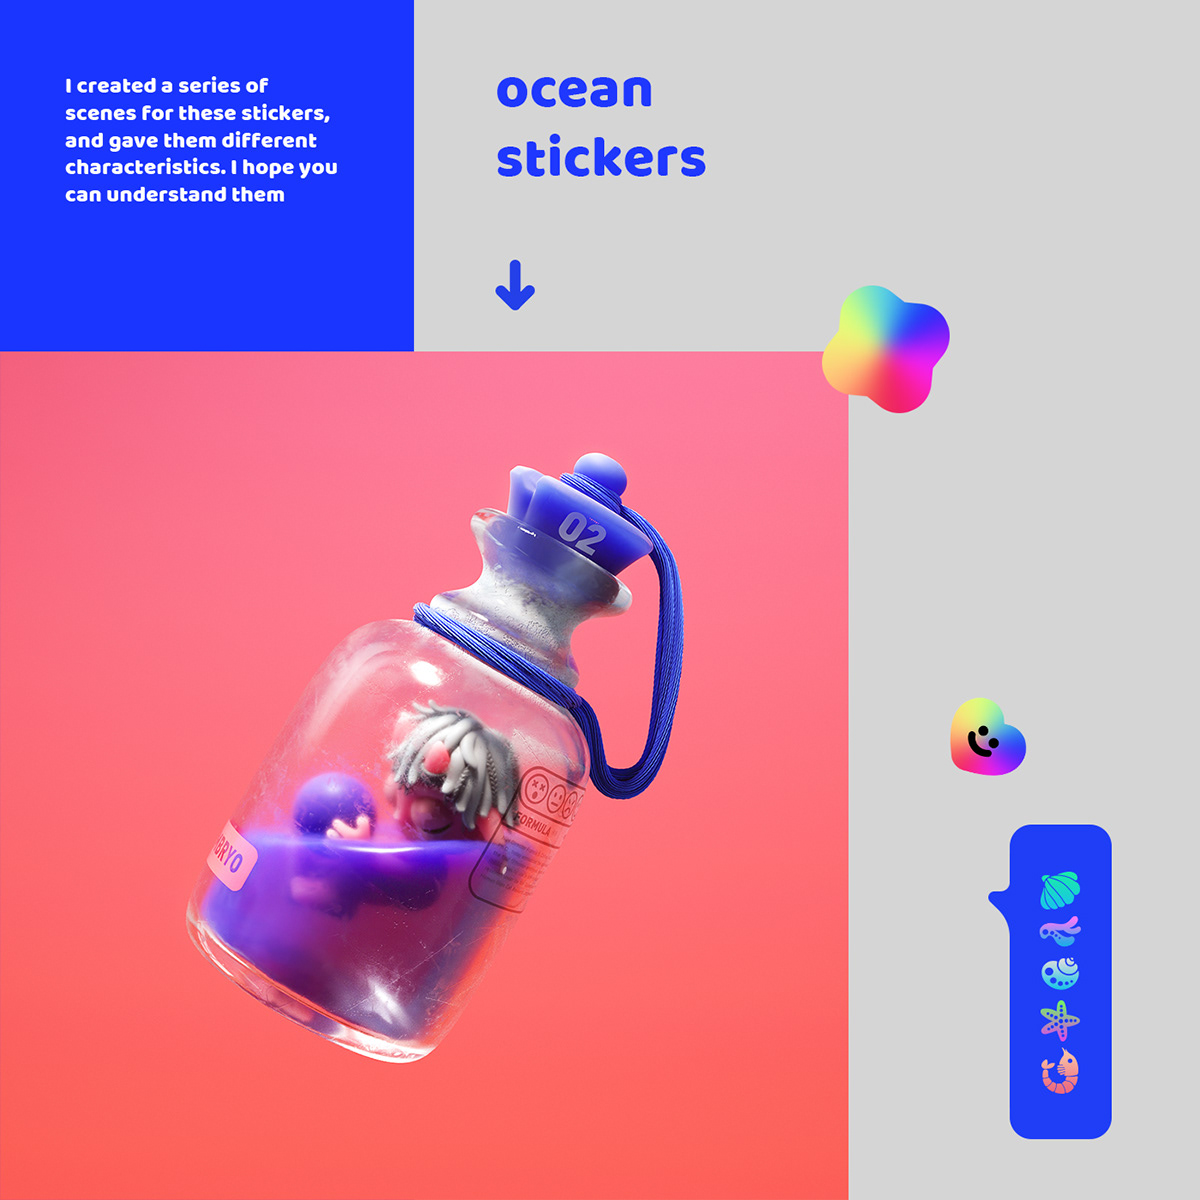 C4D OC genie Ocean stickers